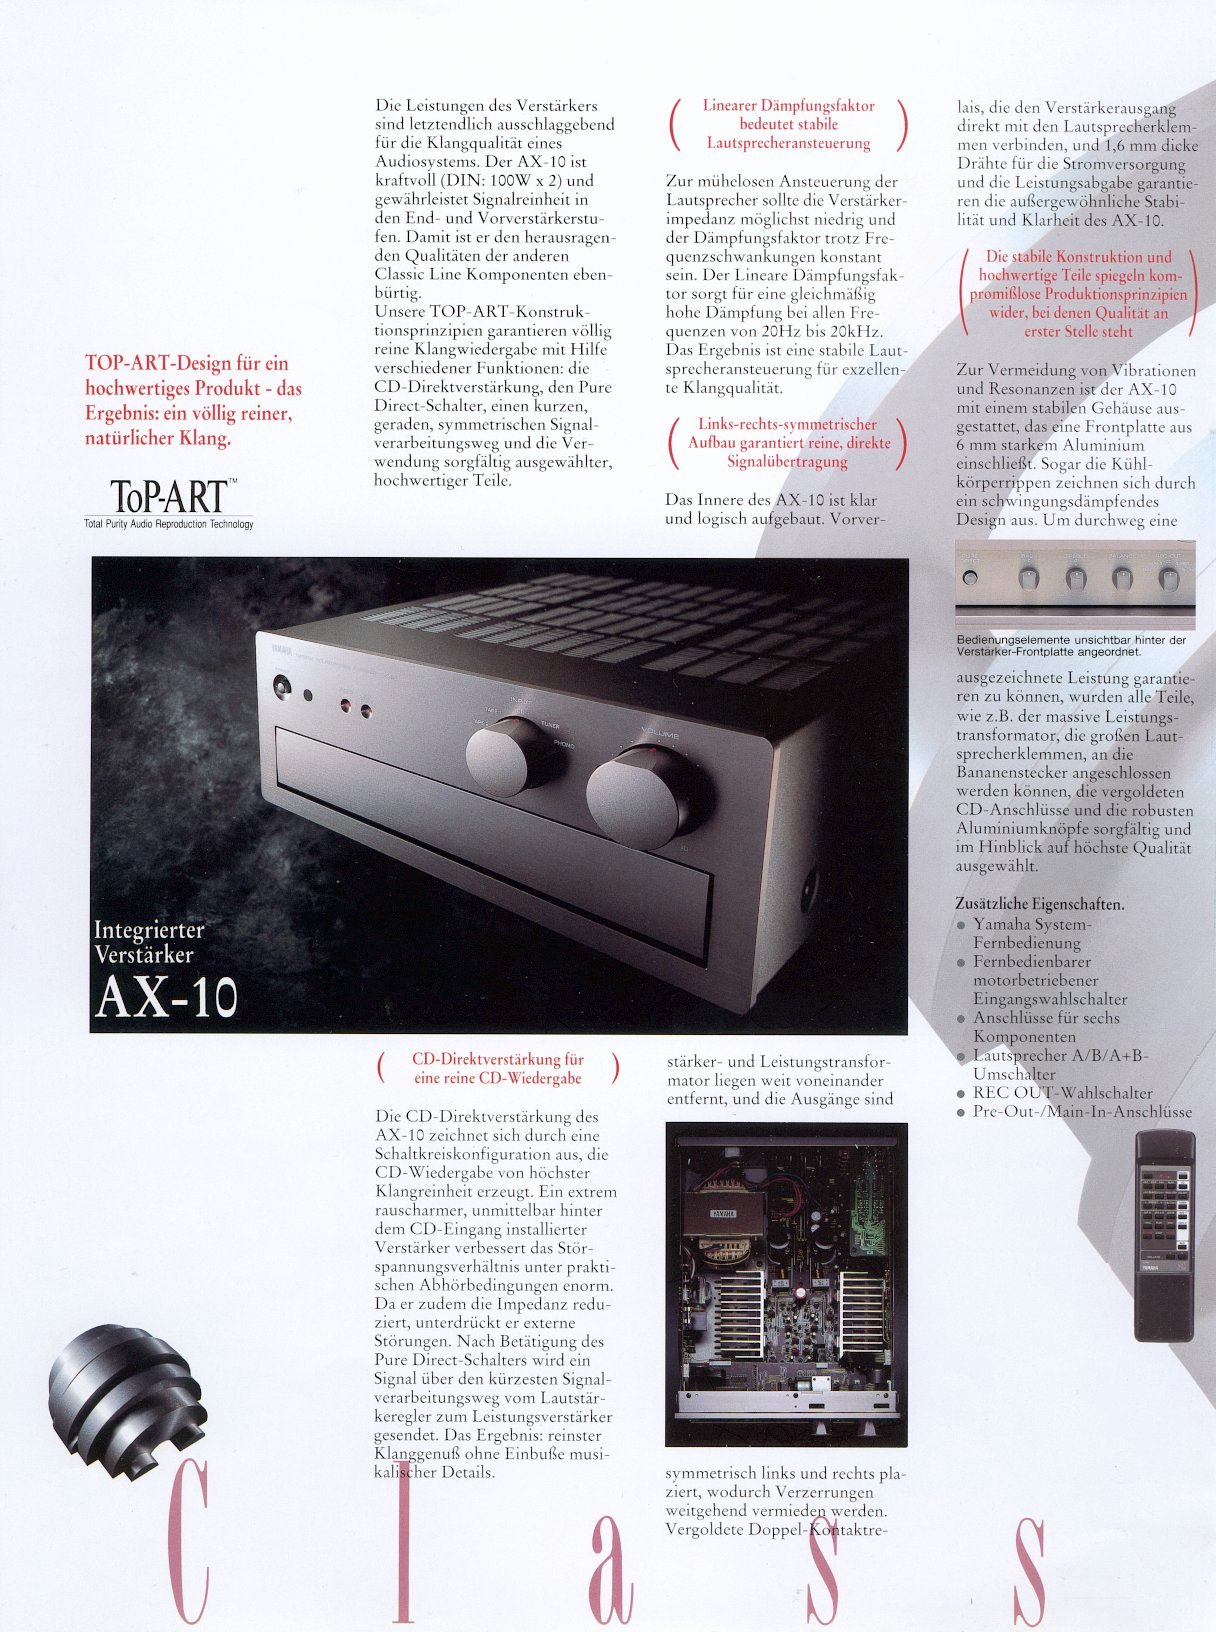 Yamaha AX-10-Prospekt-1996.jpg